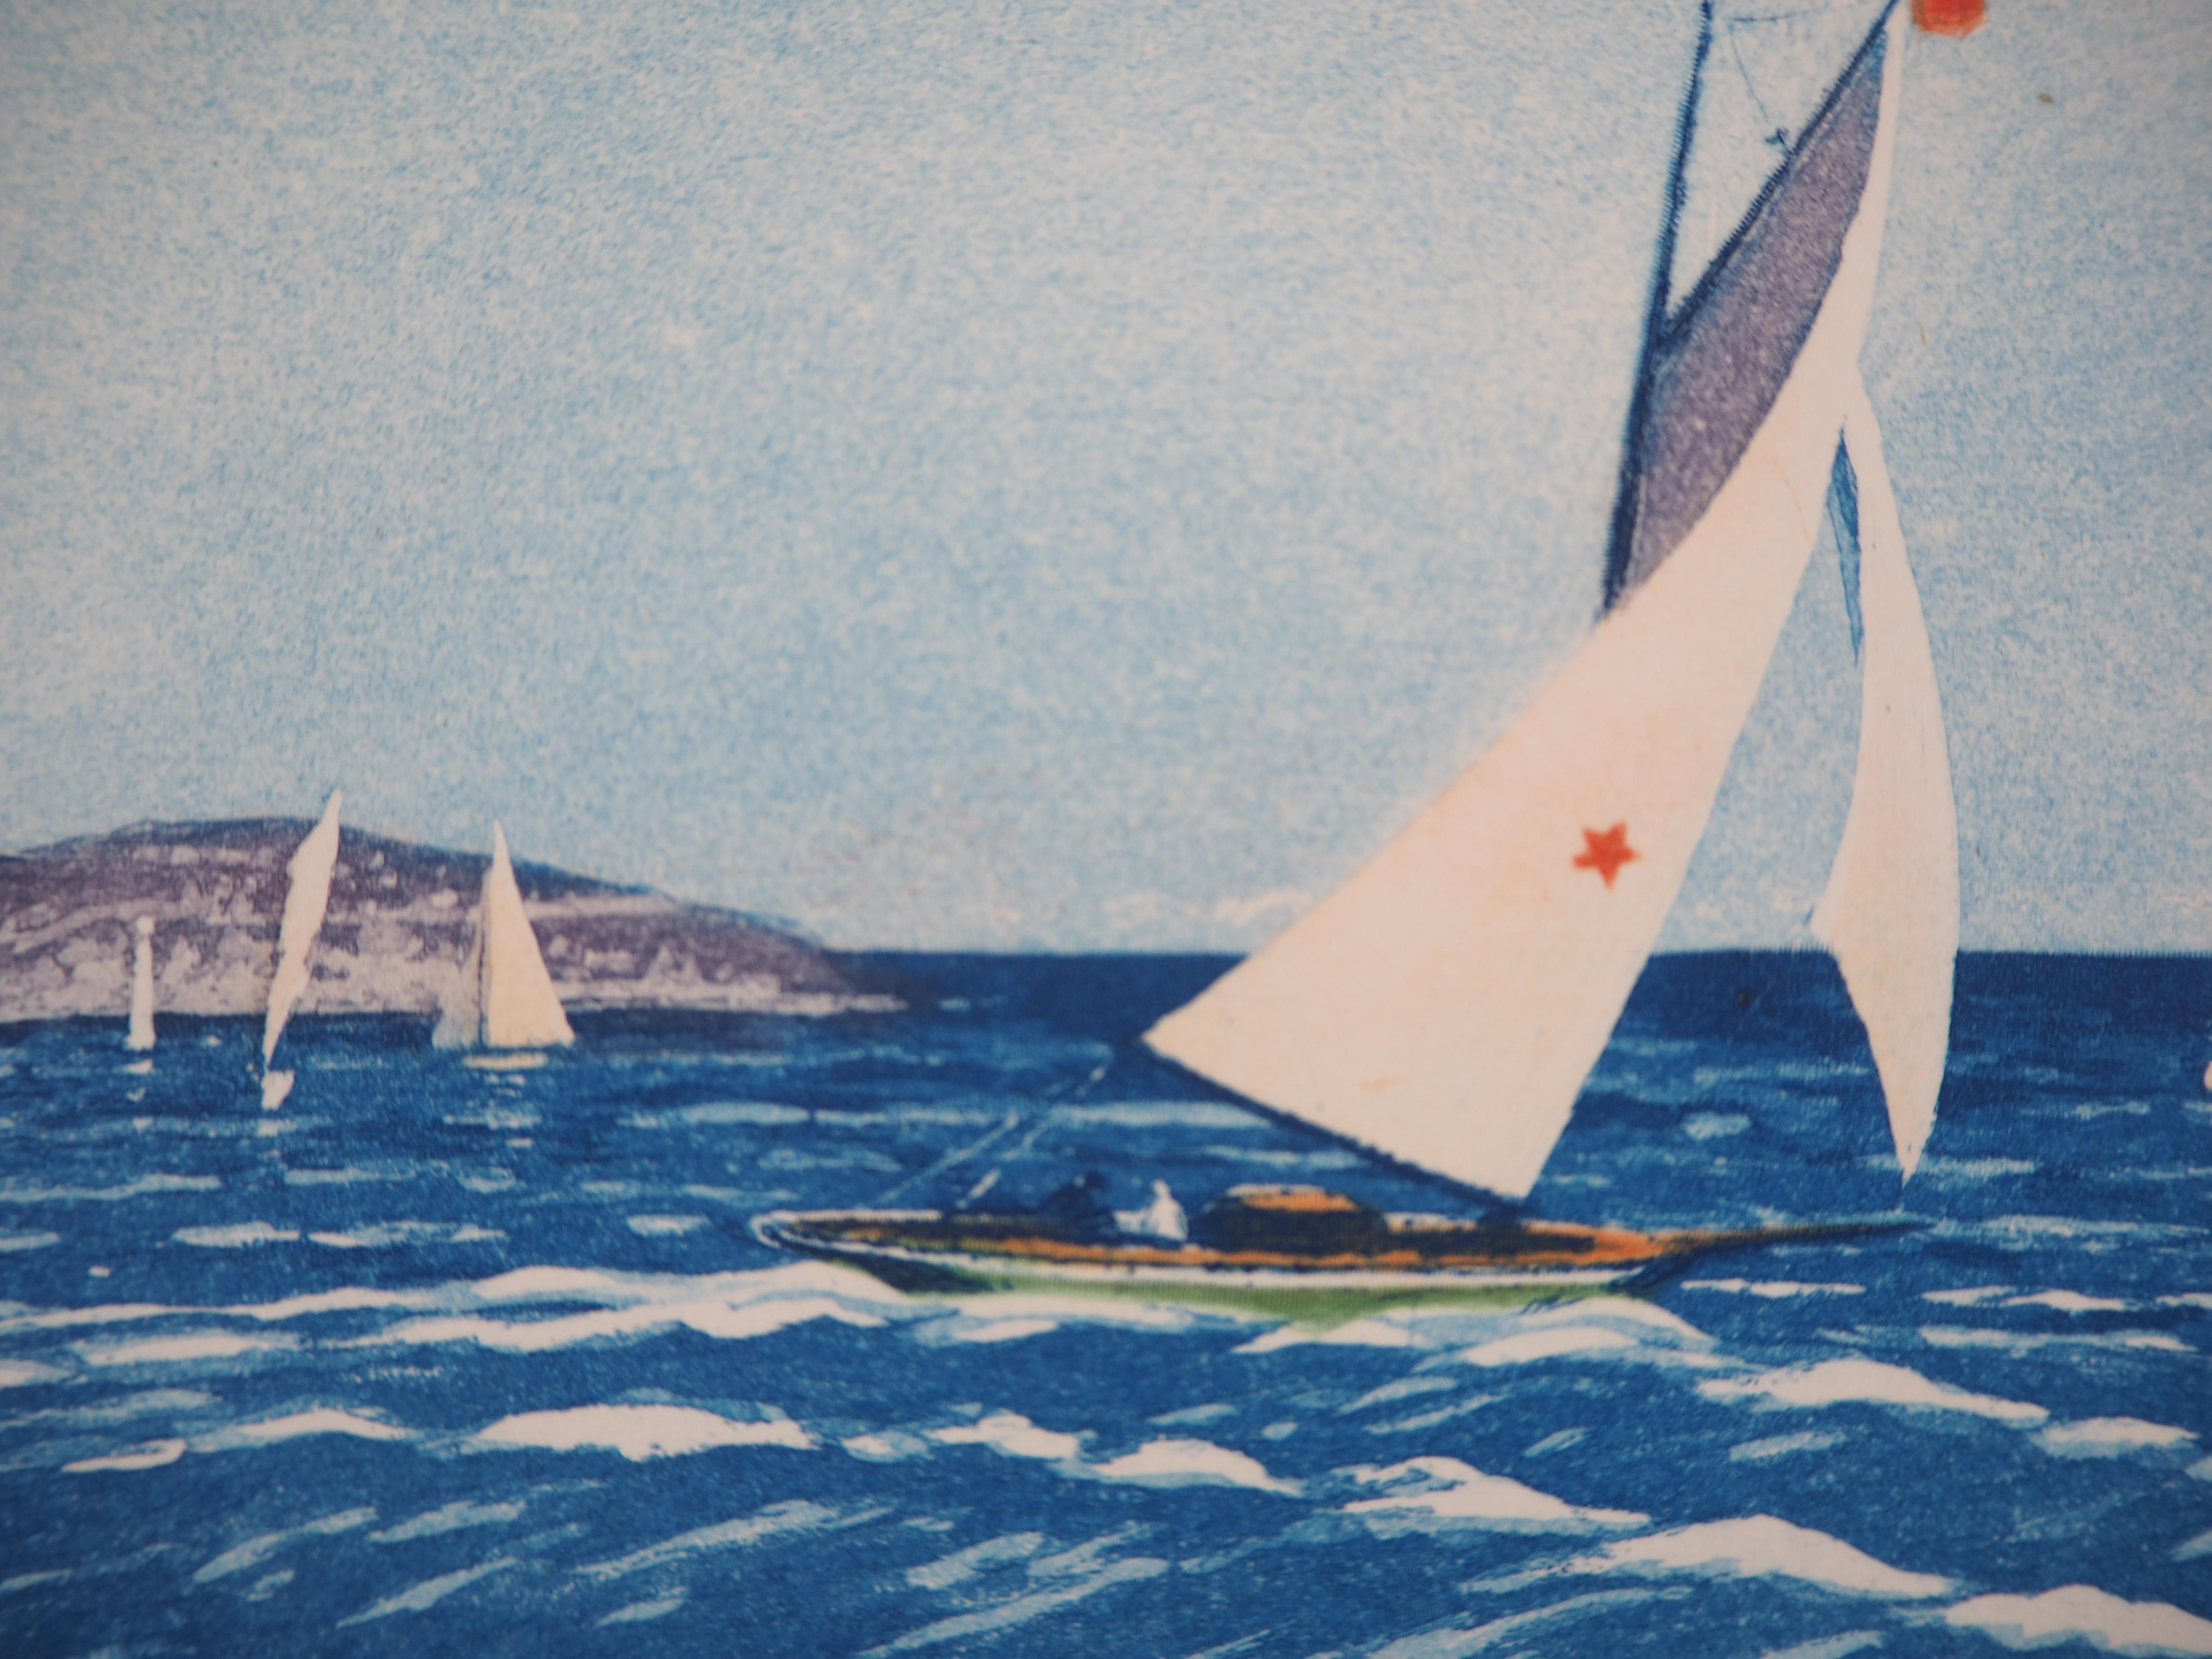 Atlantic : Regatta of Sailboats - Original etching - Art Deco Print by René Ligeron